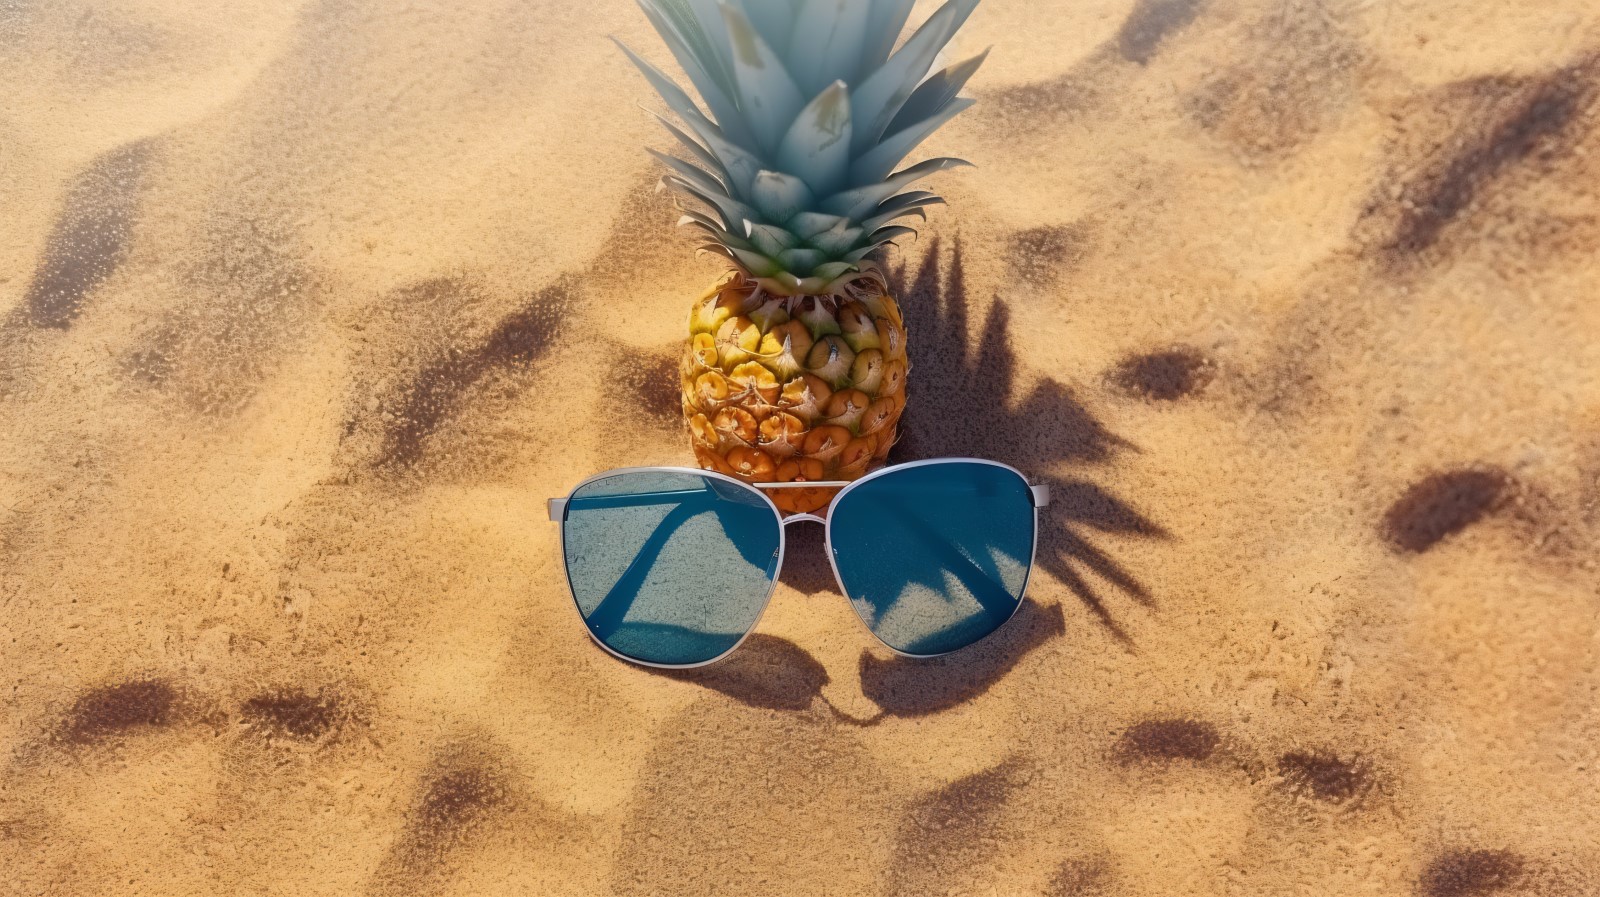 Halved pineapple and a sunglass kept on the sand 177